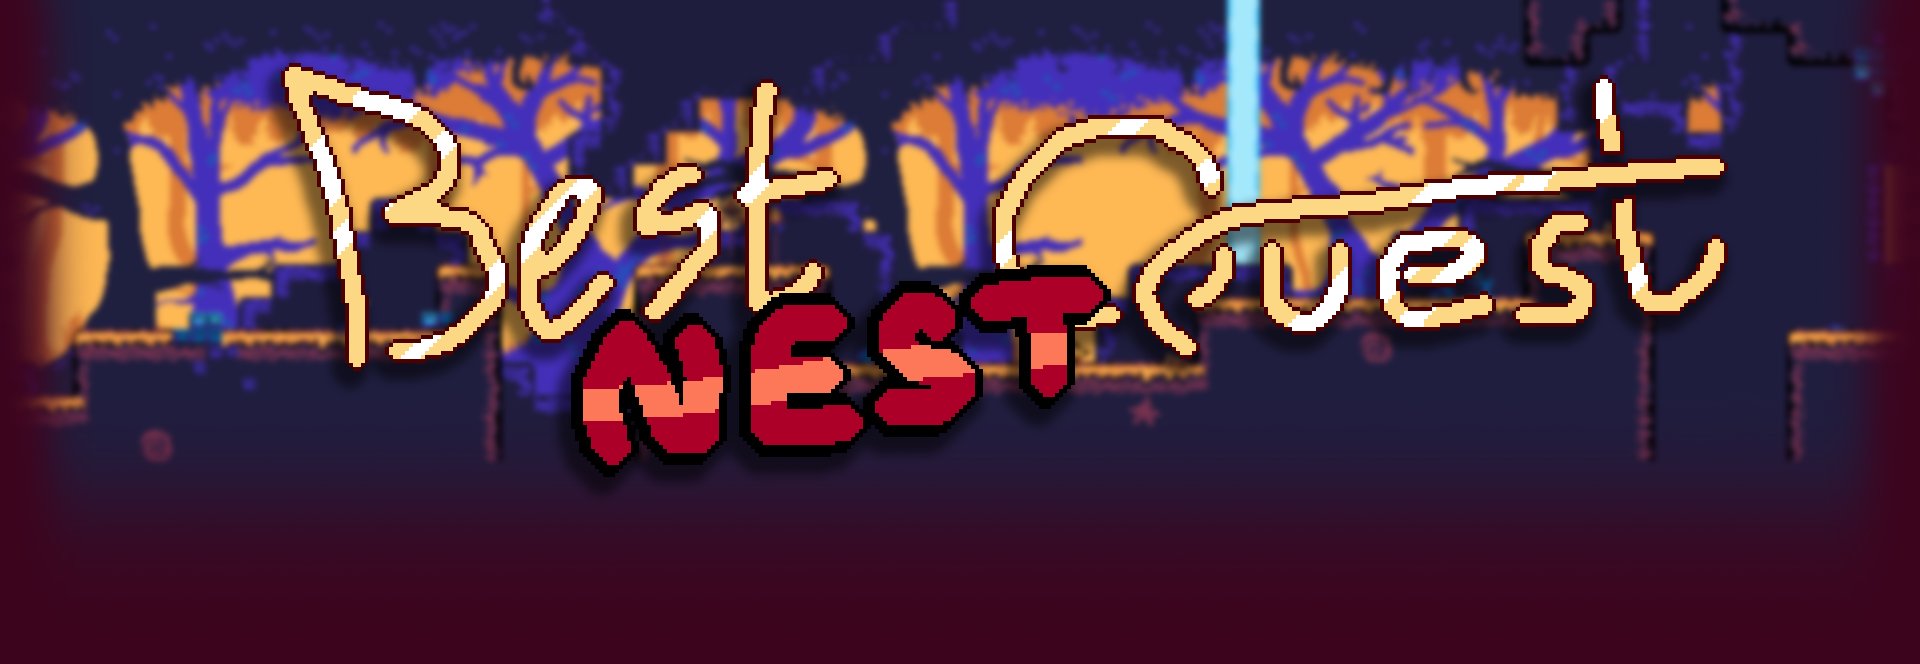 Best Nest Quest